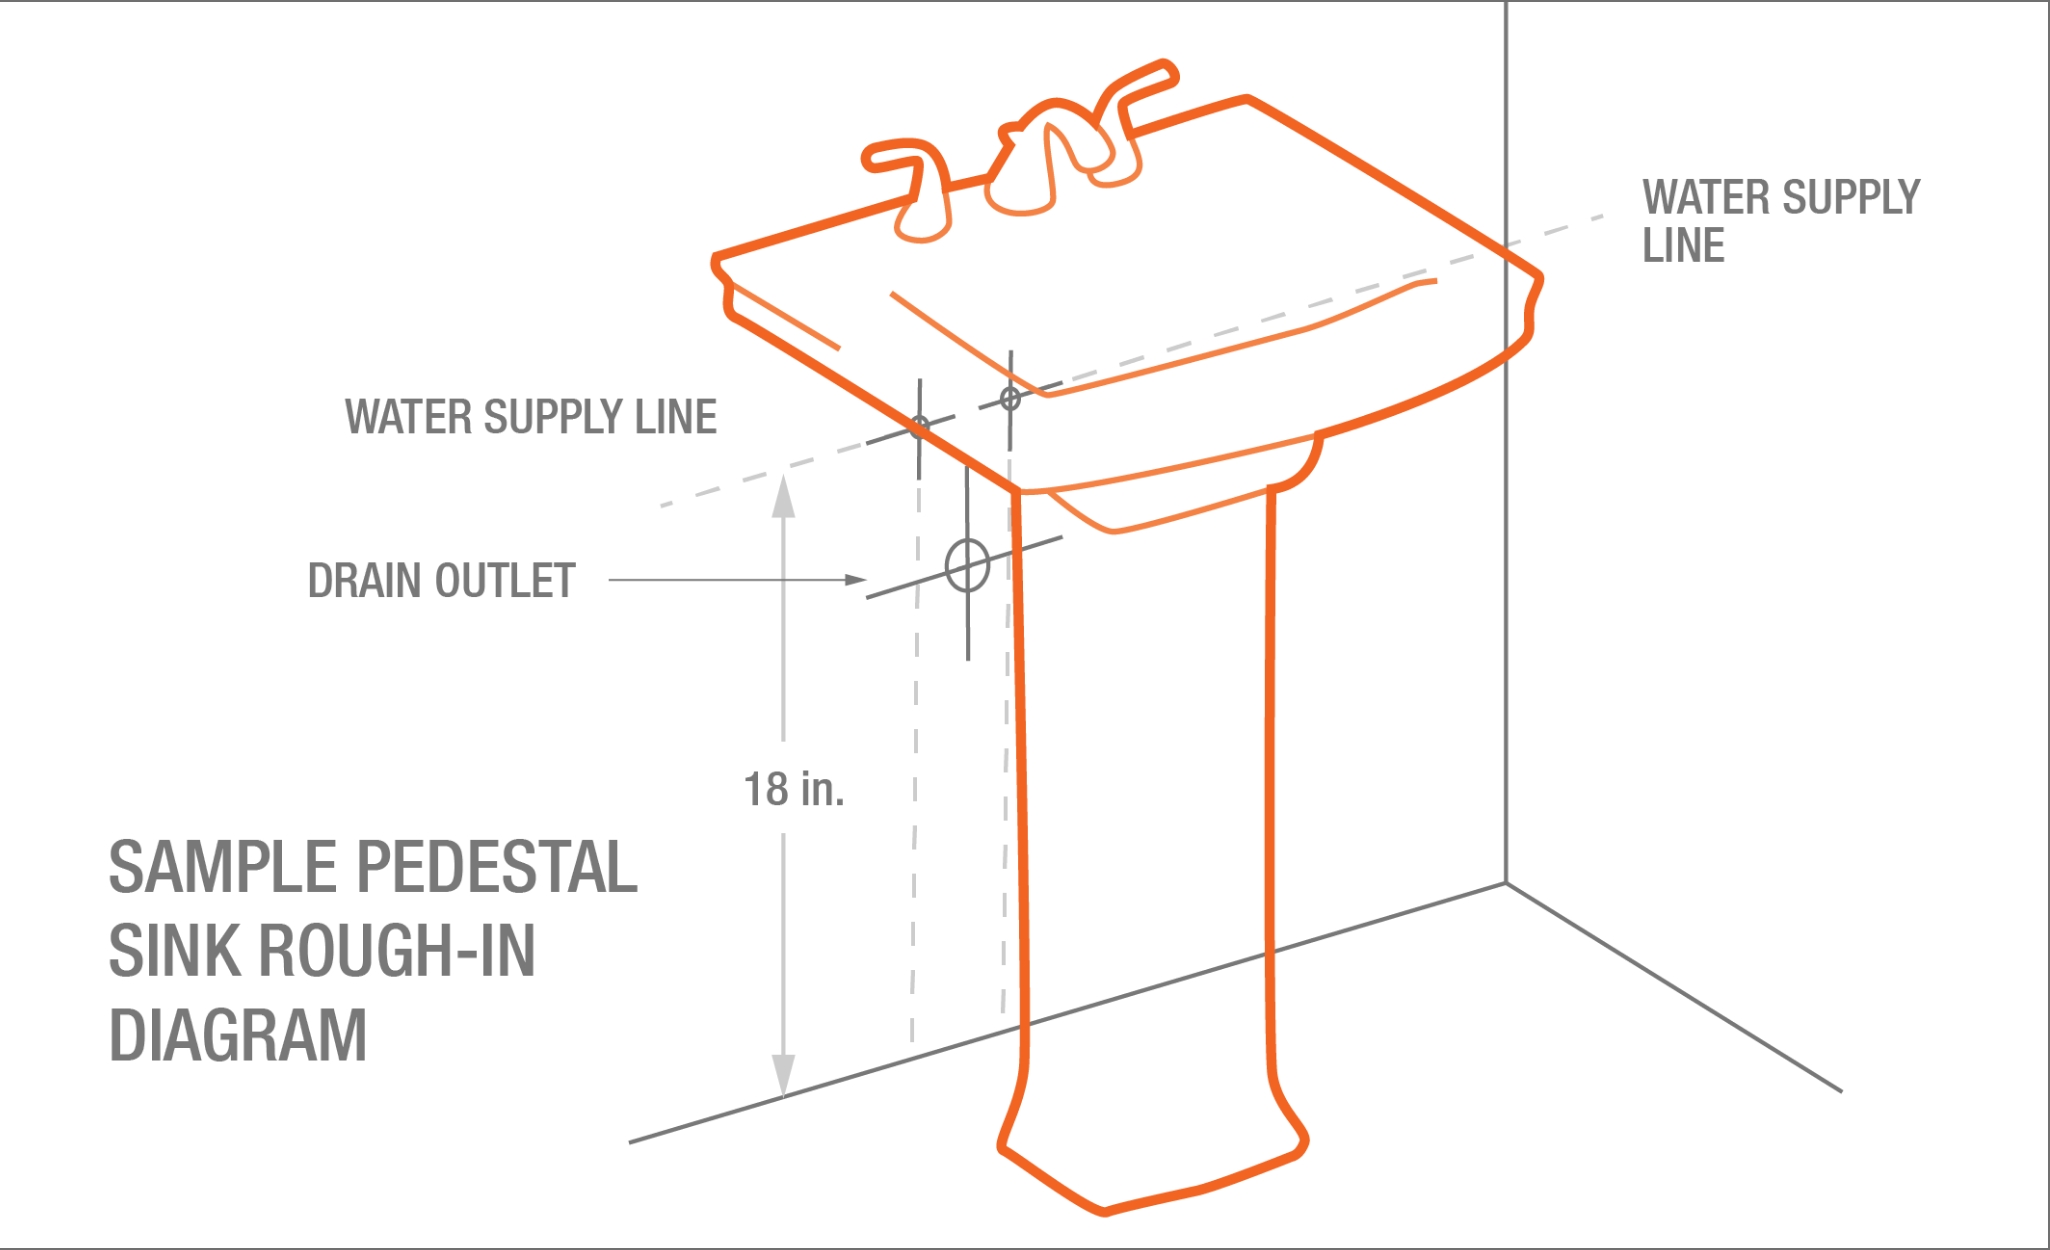 Sample pedestal sink rough-in diagram